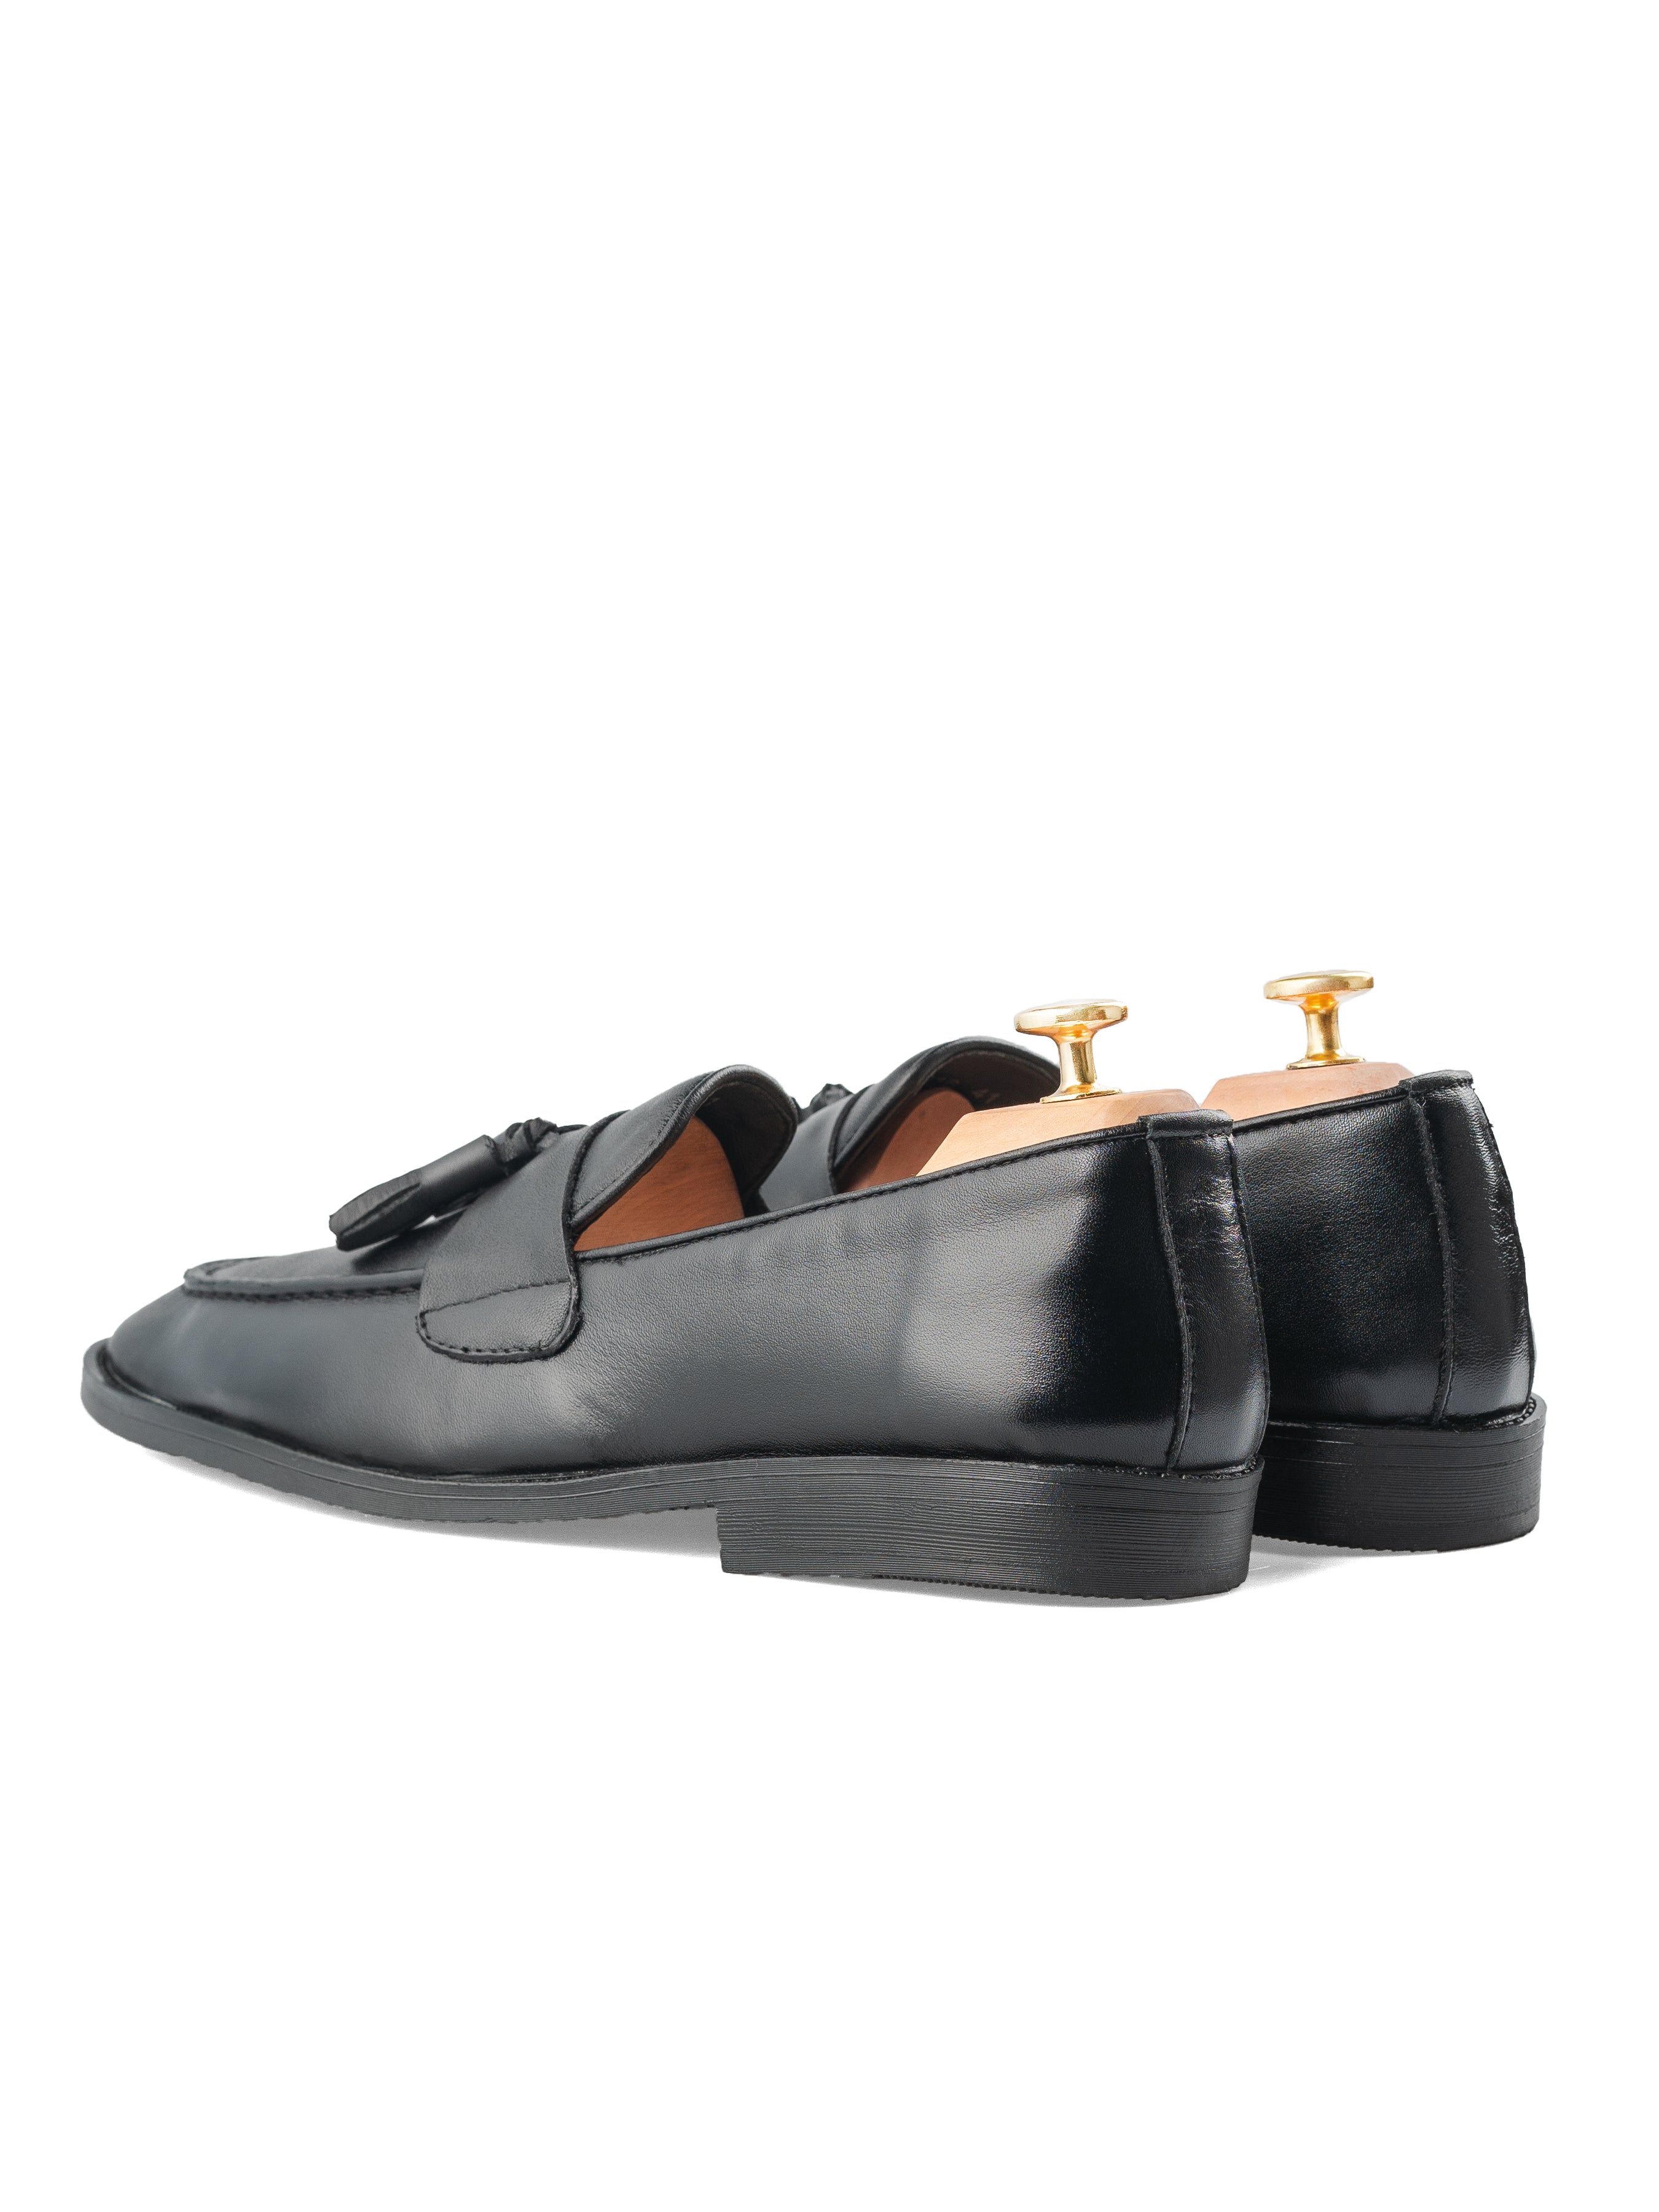 Rocky Tassel Loafer - Solid Black Leather (Flexi-Sole)